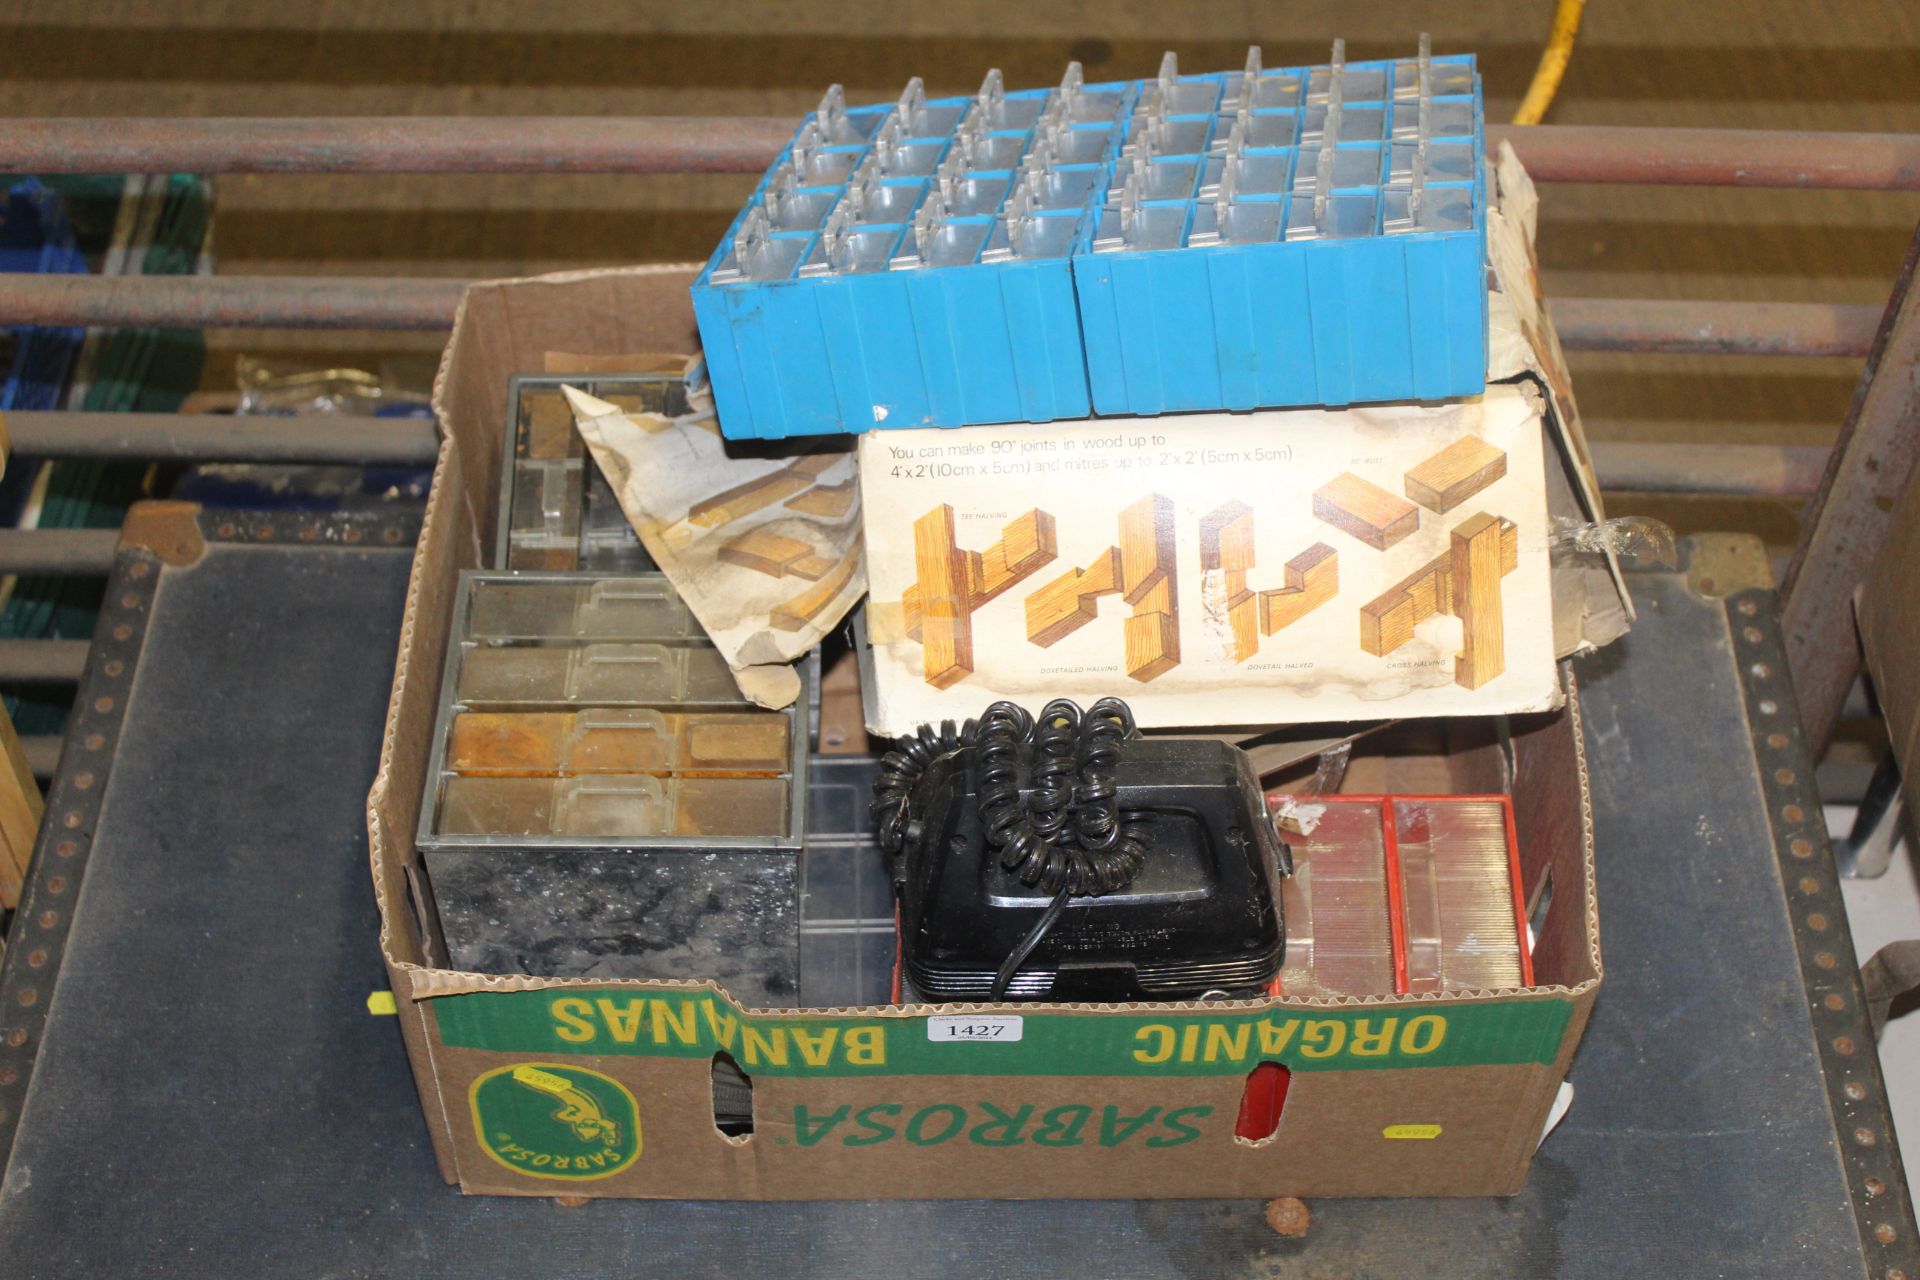 A box containing various multi-drawer storage rack